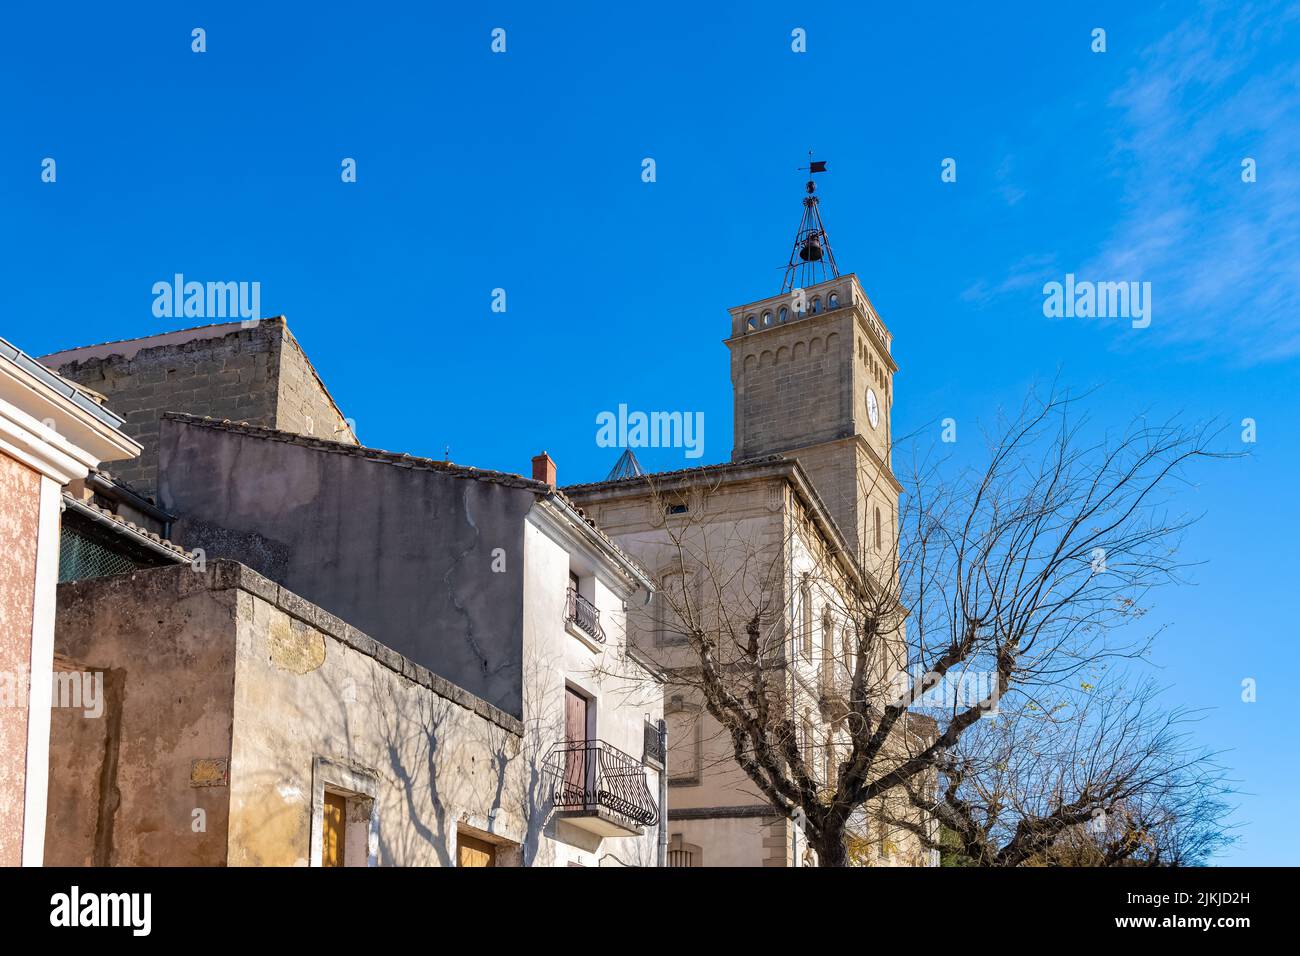 Saint-Quentin-la-Poterie in France, the Tour de l’Horloge in the center of the village Stock Photo